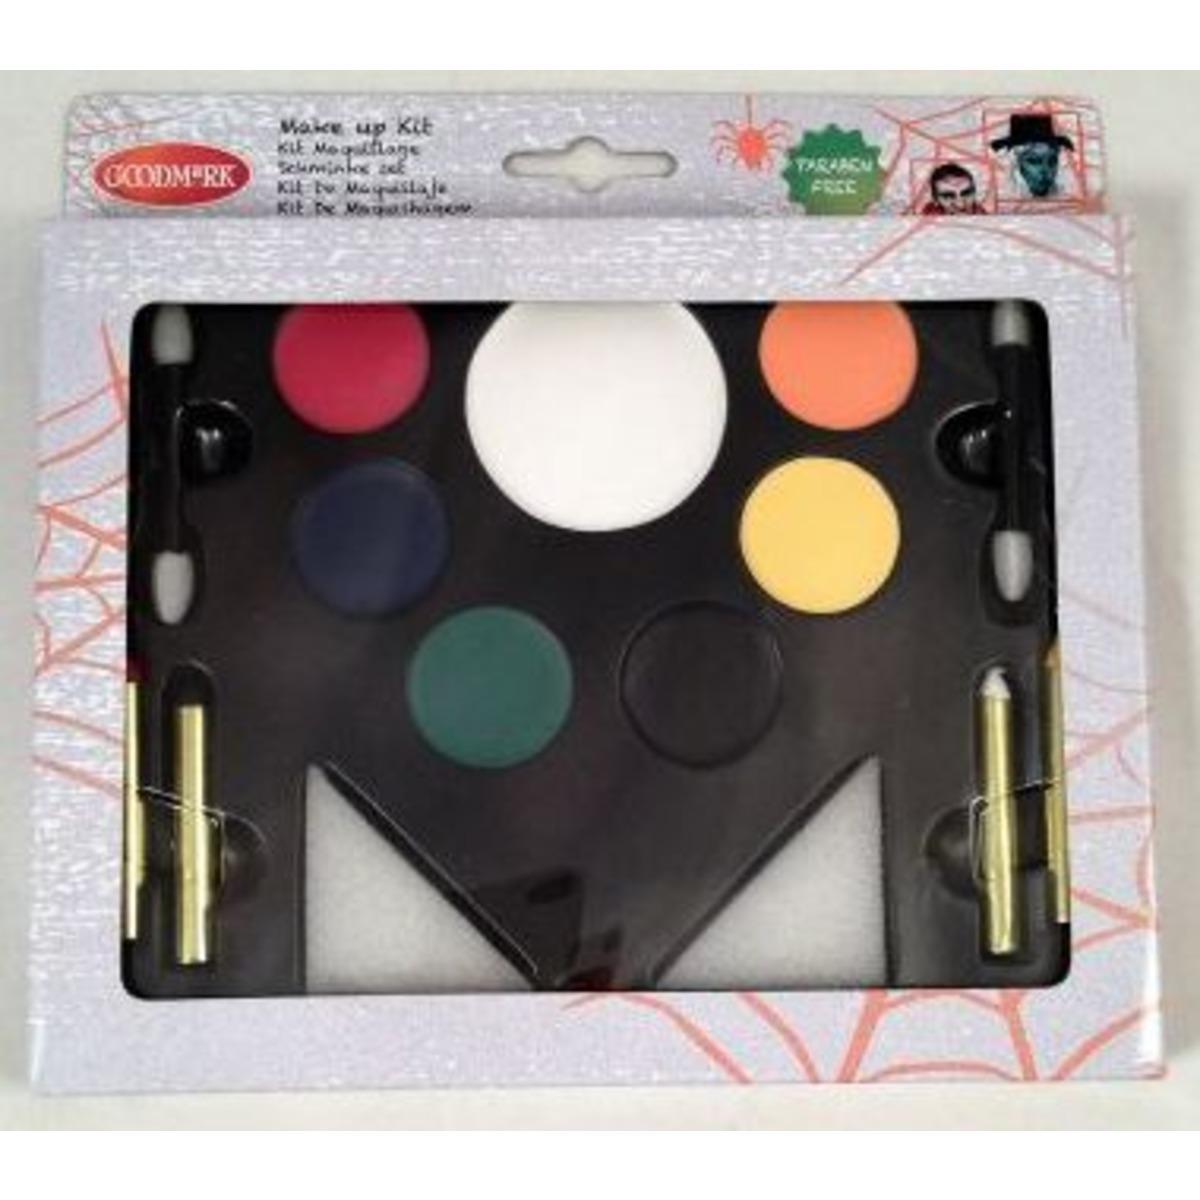 Kit de maquillage halloween famille - Multicolore